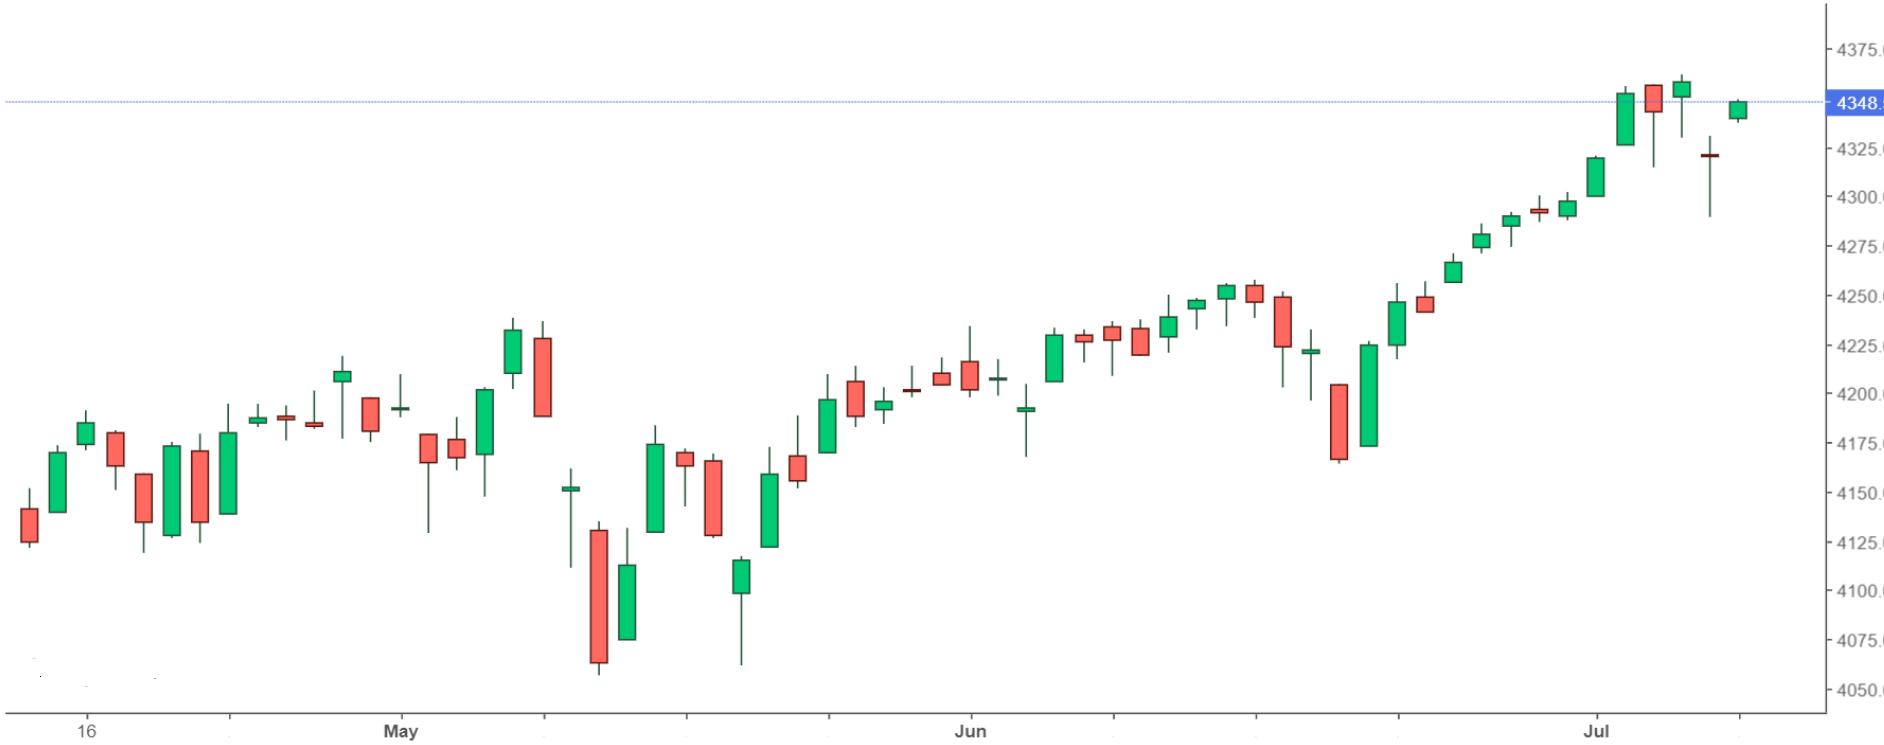 S&P 500 Index opens higher, ready to close Thursday’s bearish gap